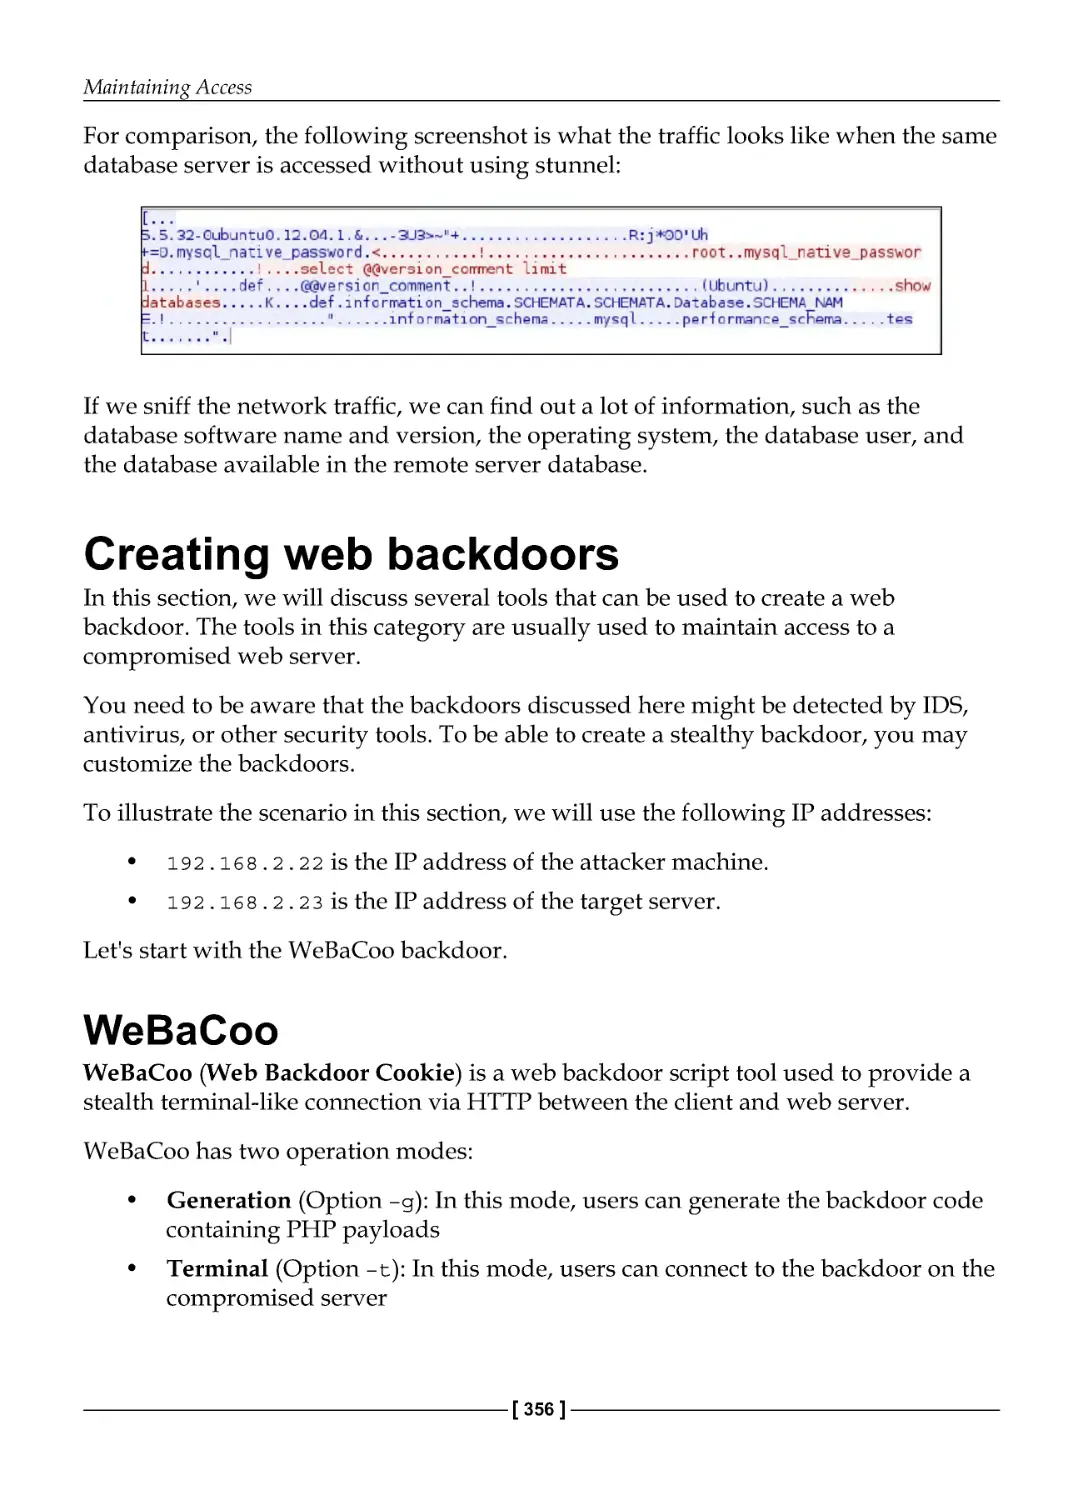 Creating web backdoors